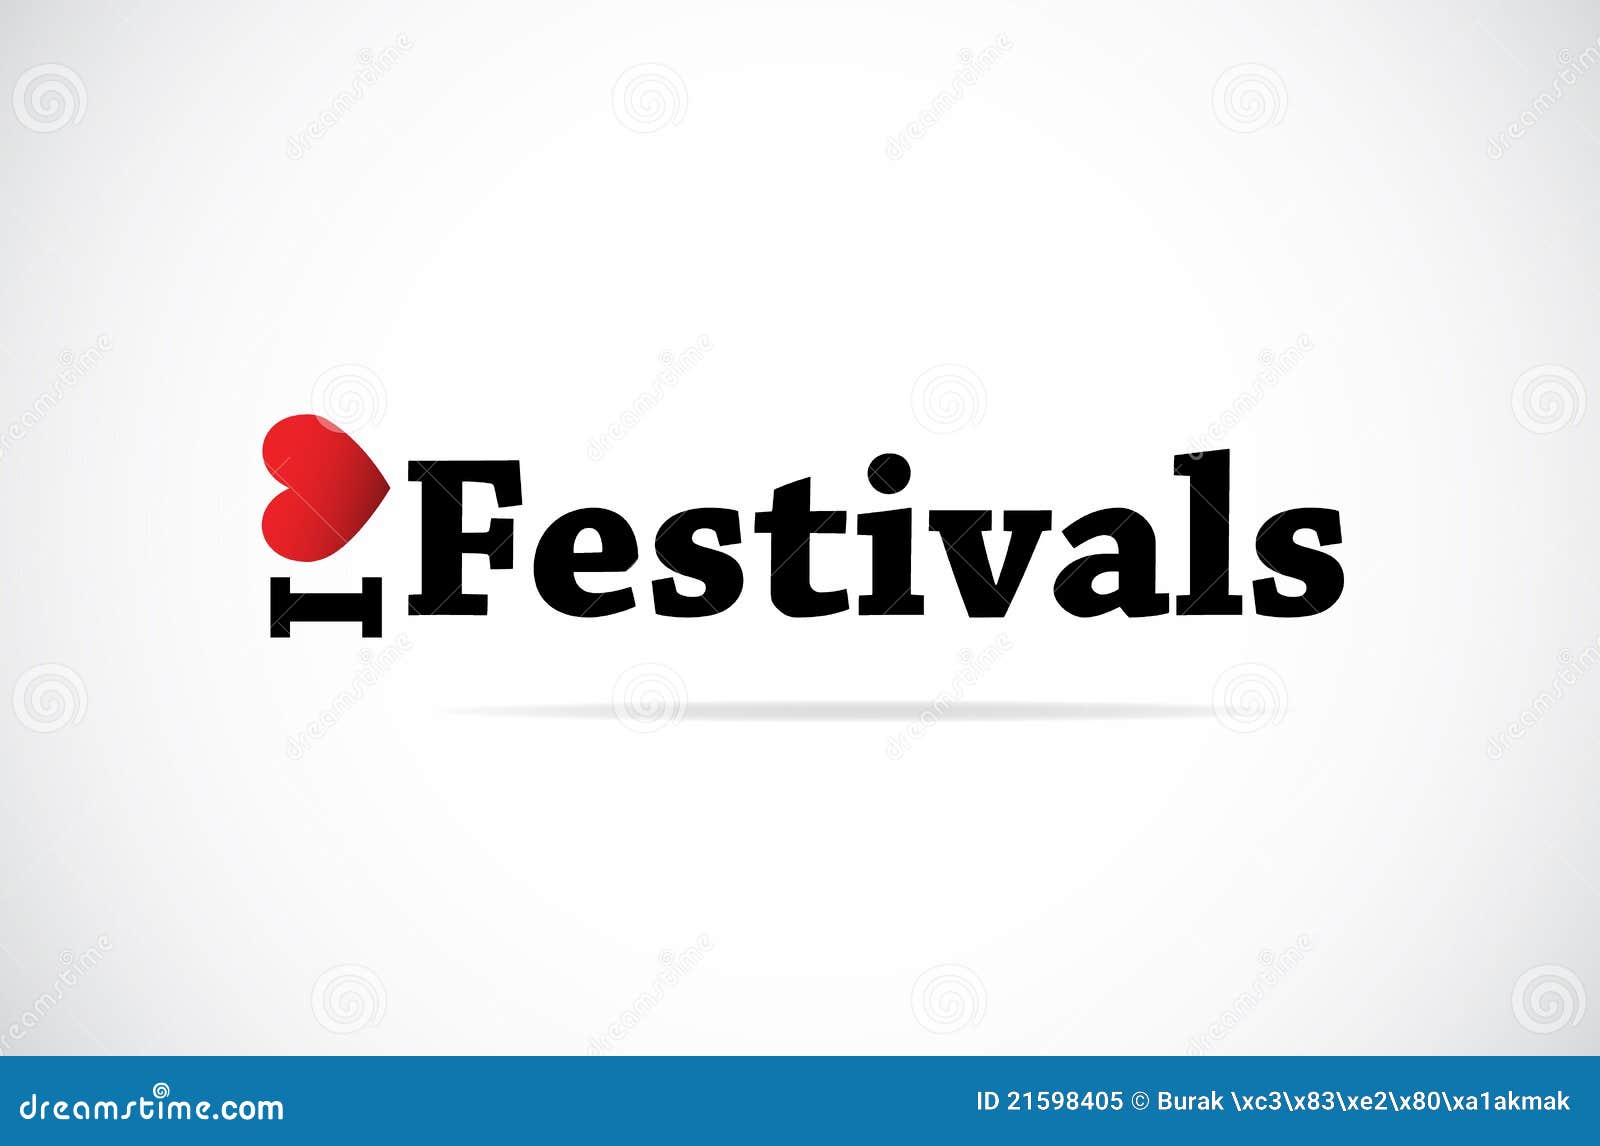 i love festivals